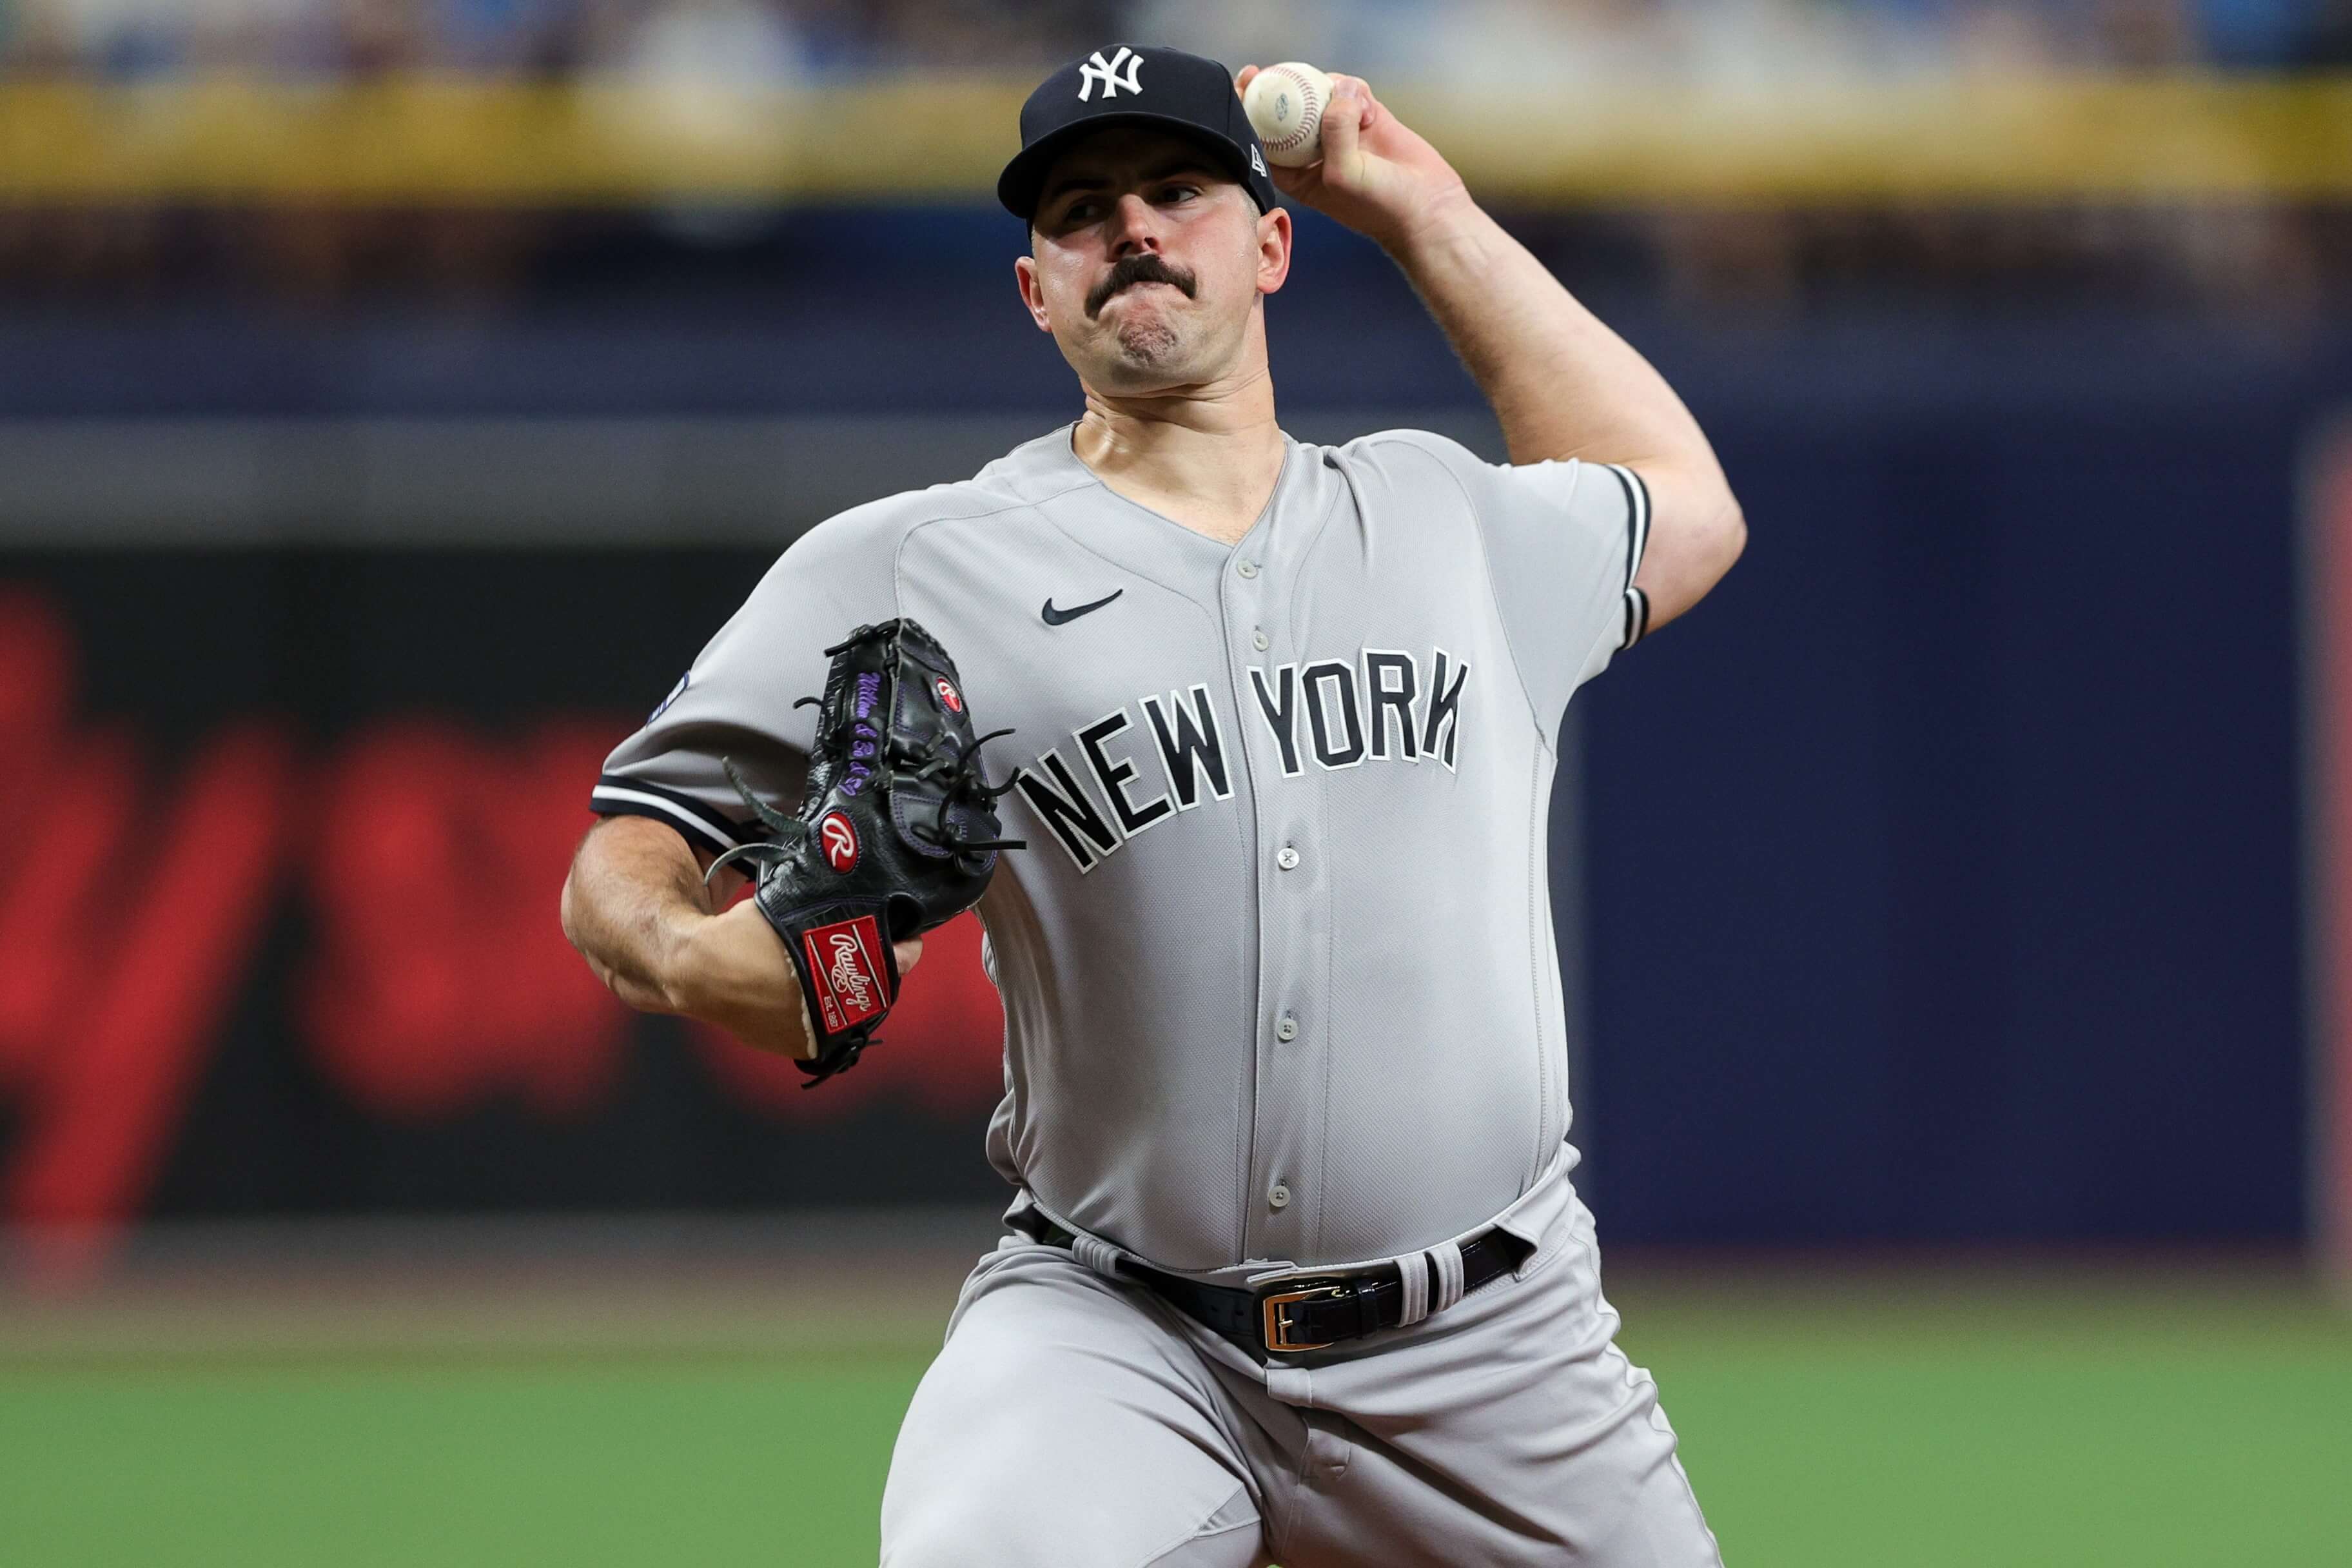 Yankees vs. Astros: Odds, spread, over/under - September 1